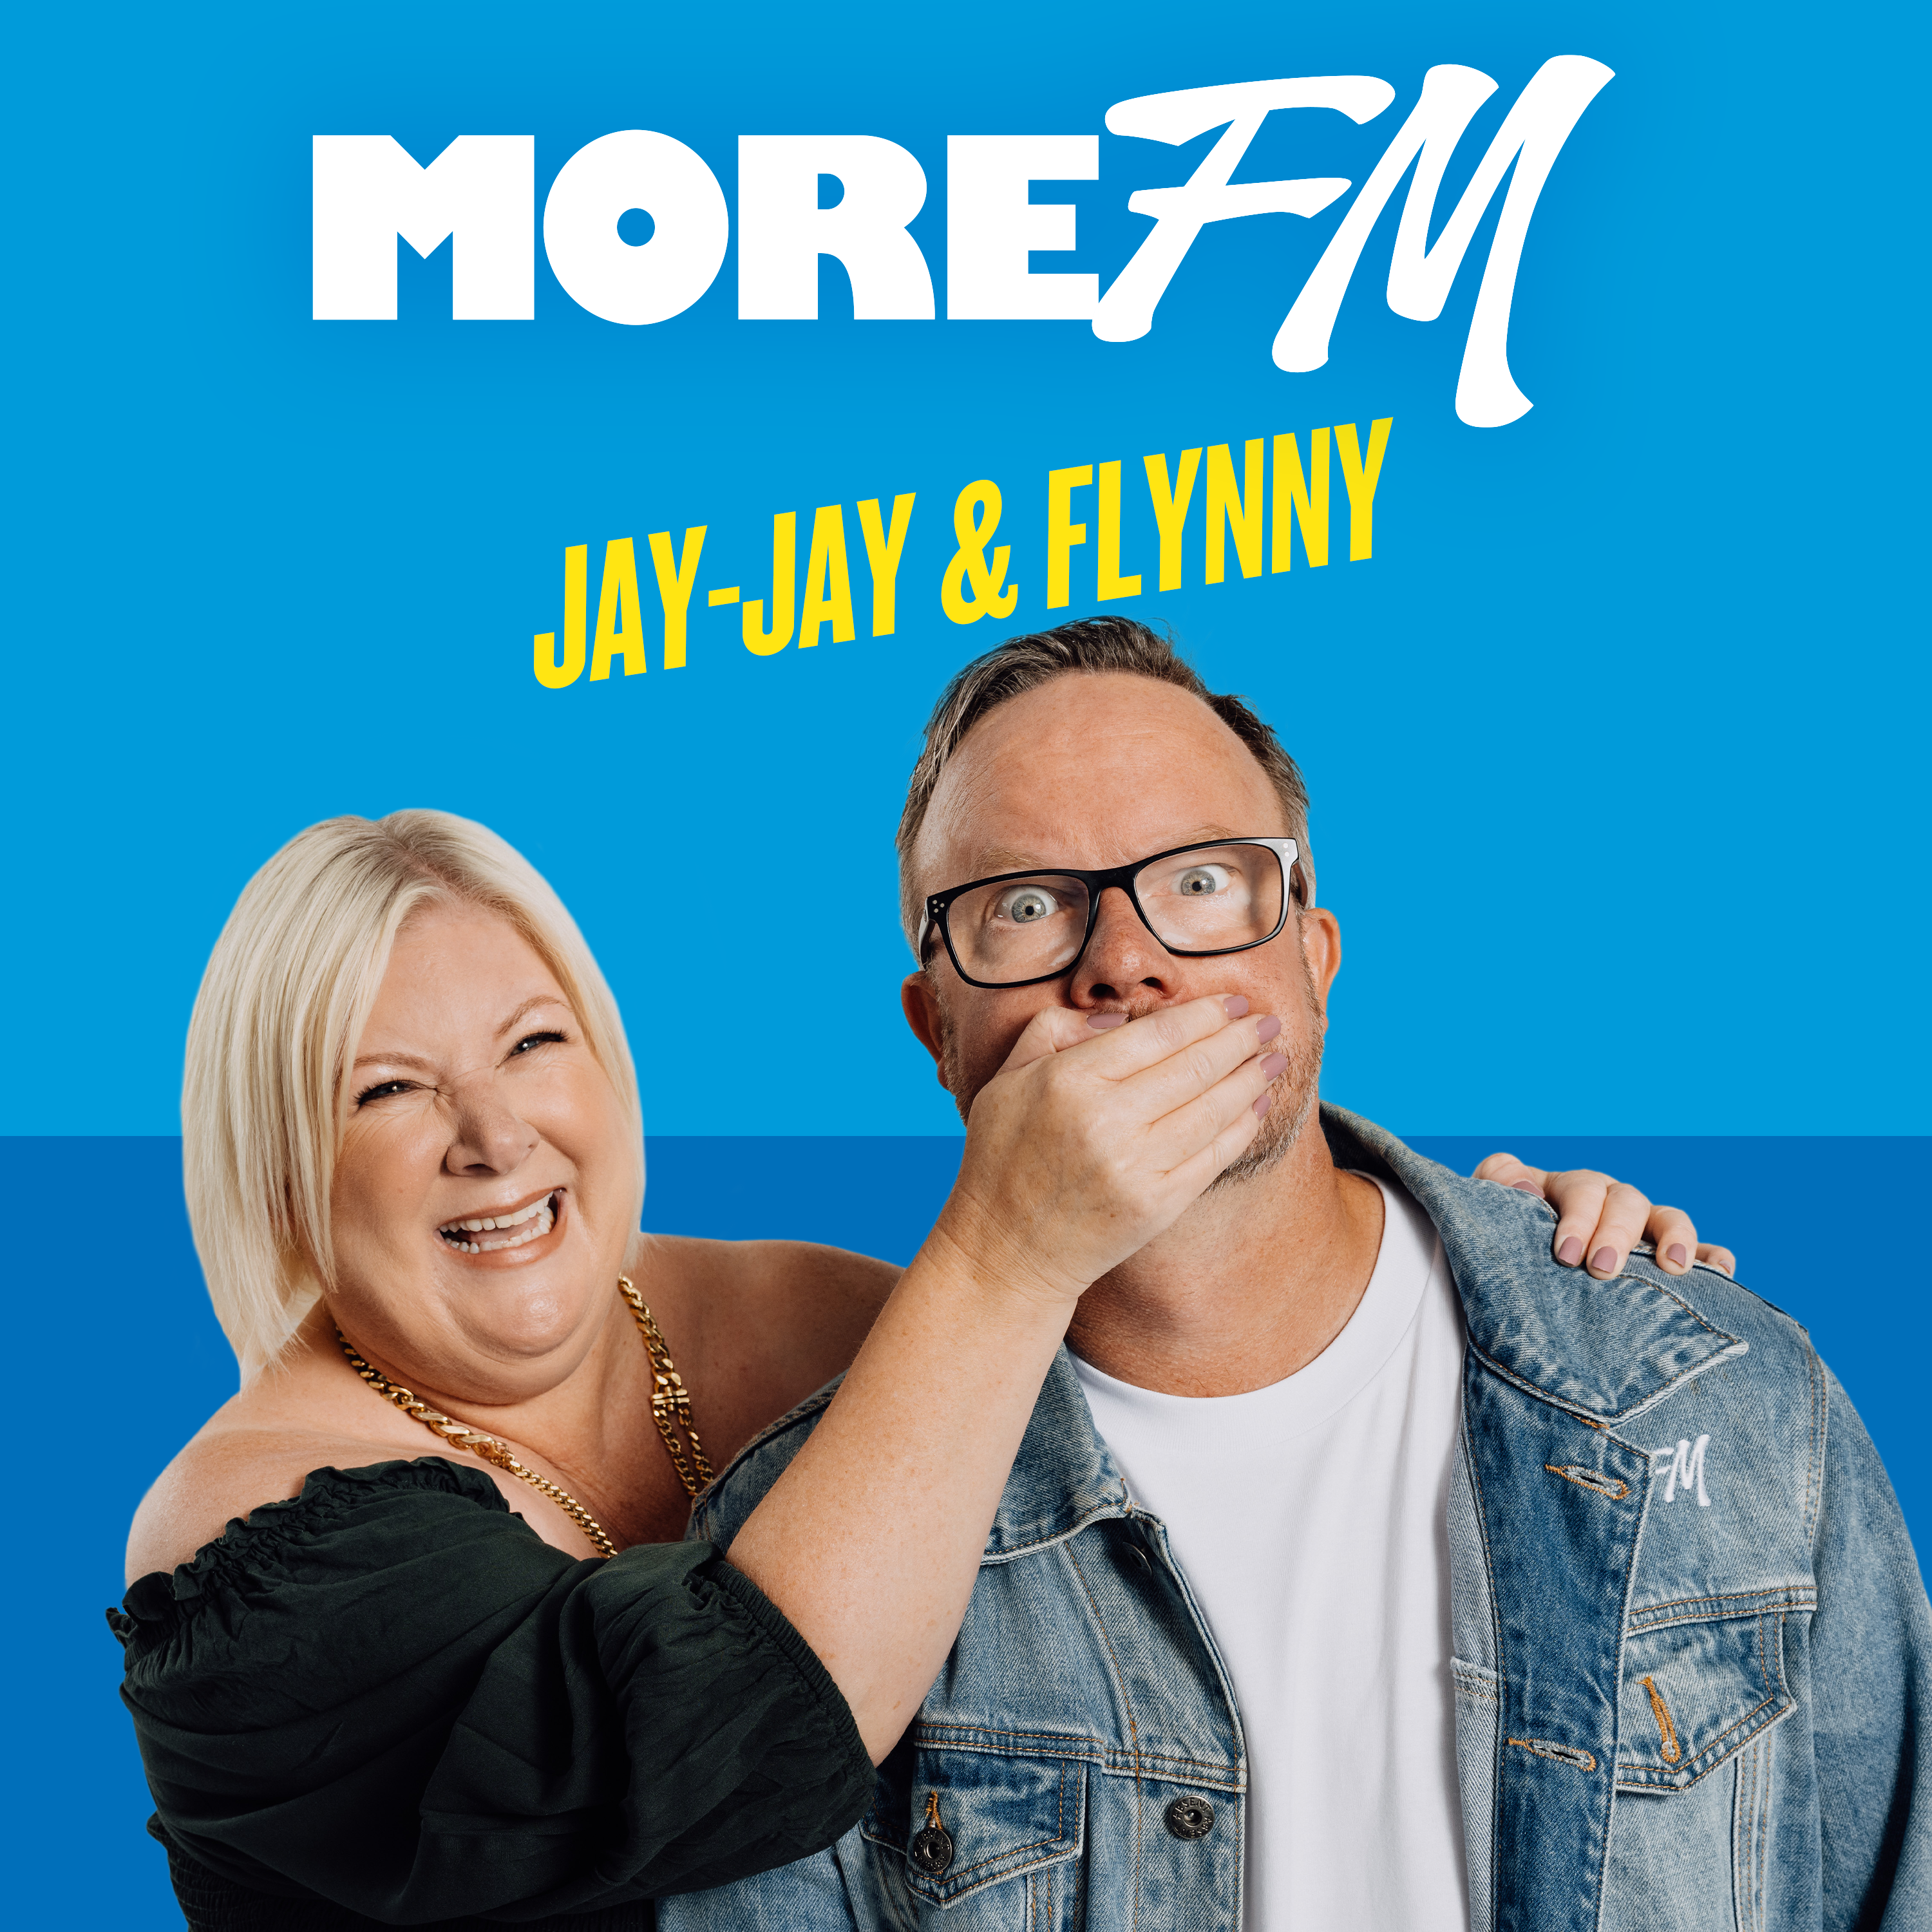 Full Show: Musical Guest FOLEY, Jay Jays DNA Traits + The Mum Panel! Jay Jay & Flynny 07/05/24